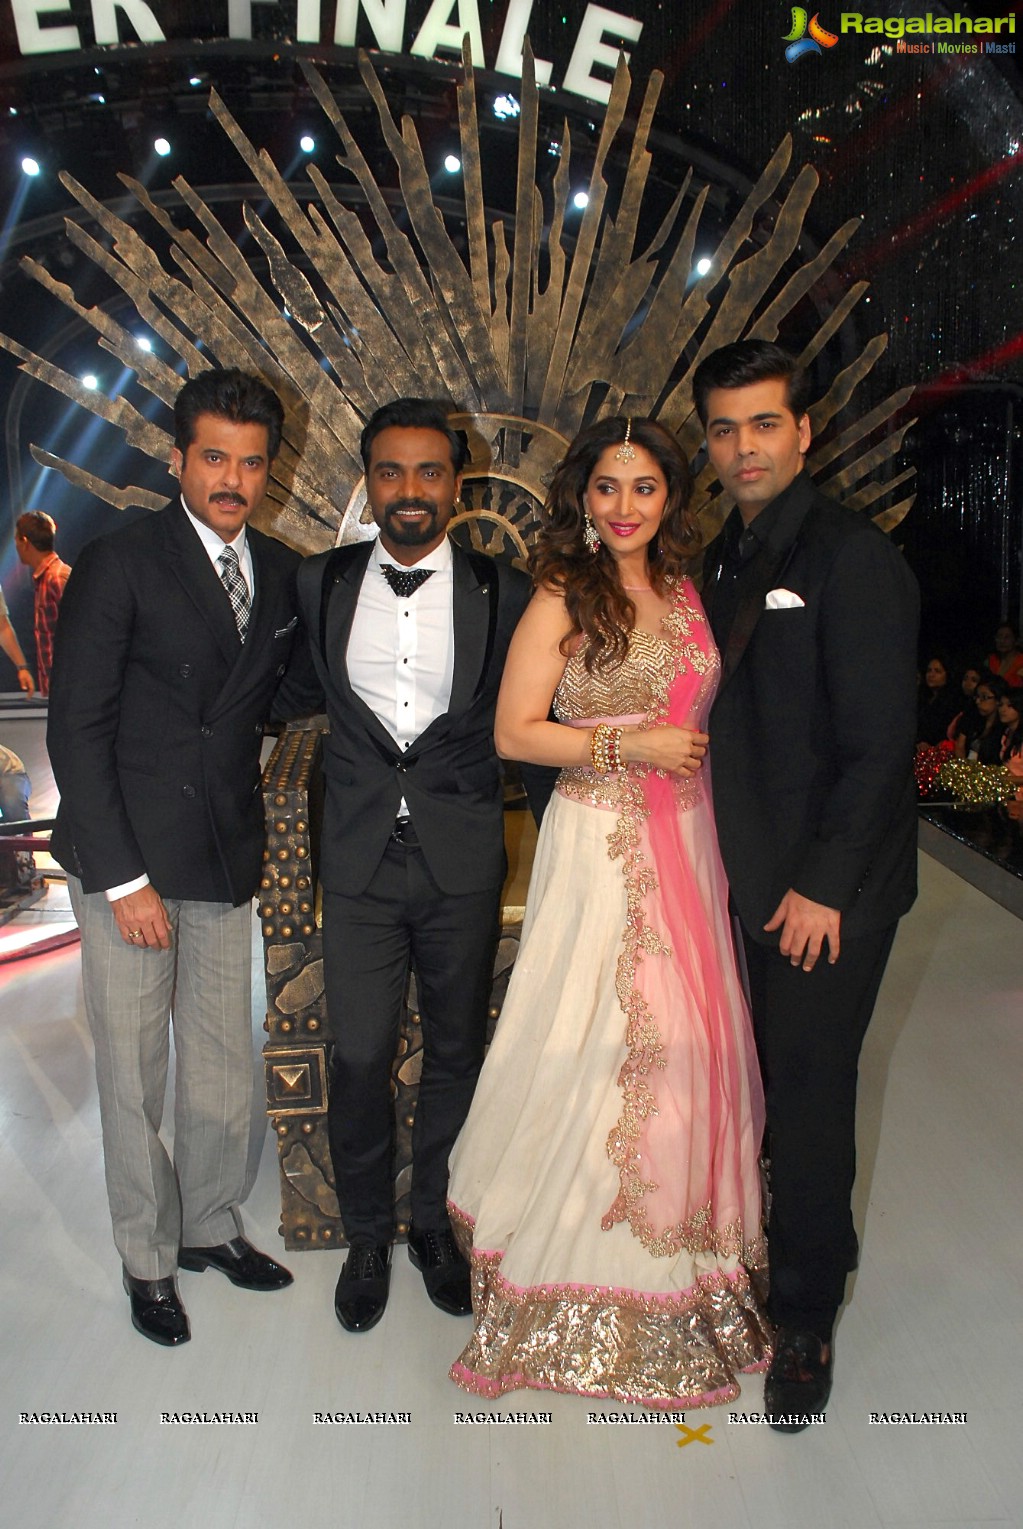 Anil Kapoor and Madhuri Dixit in 'Jhalak Dikhhla Jaa' Season 7 Finale